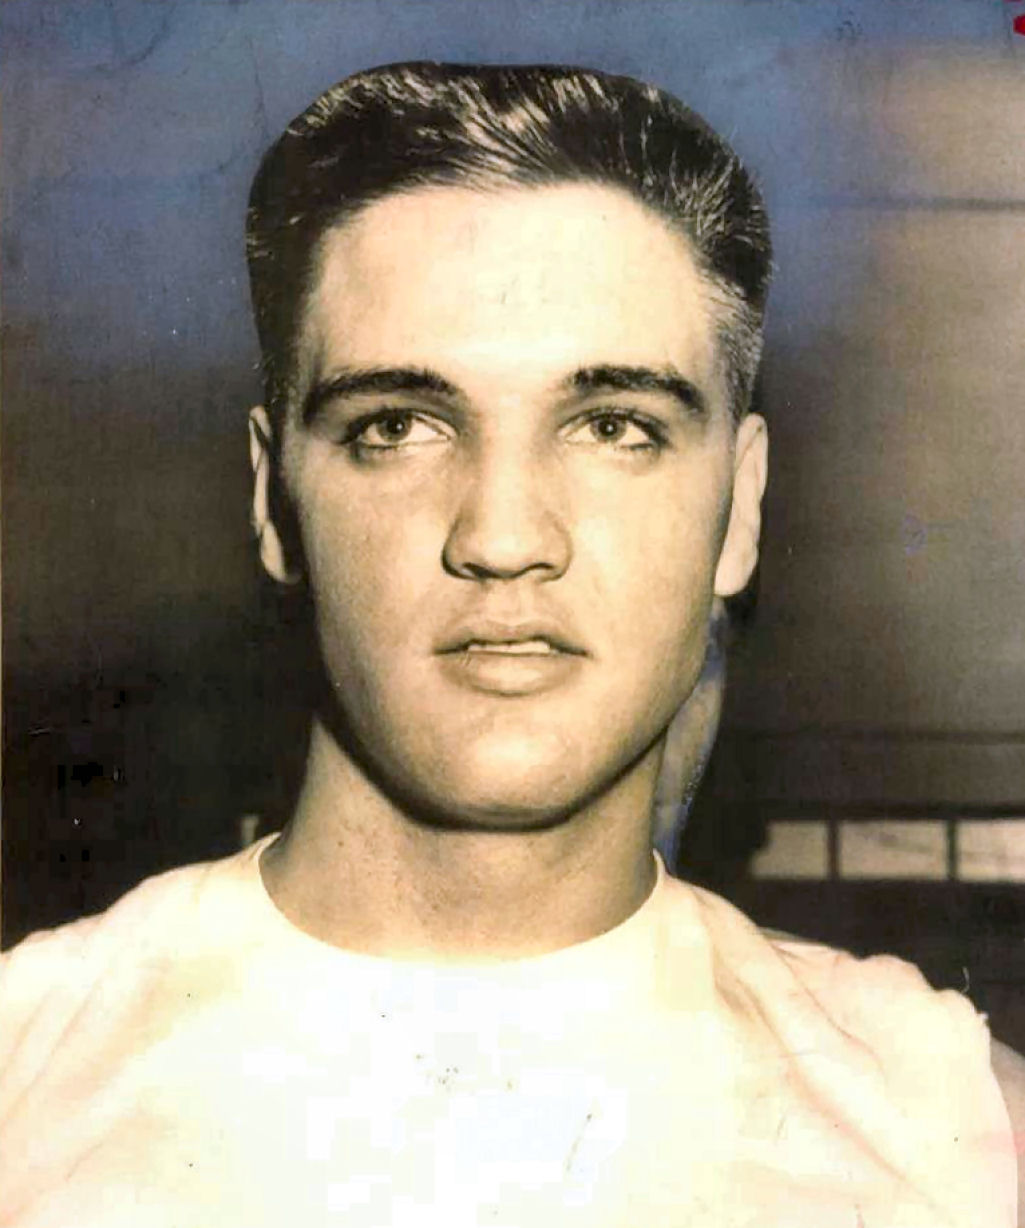 Fotos antigas de Elvis Presley mostram que ele era realmente loiro 11